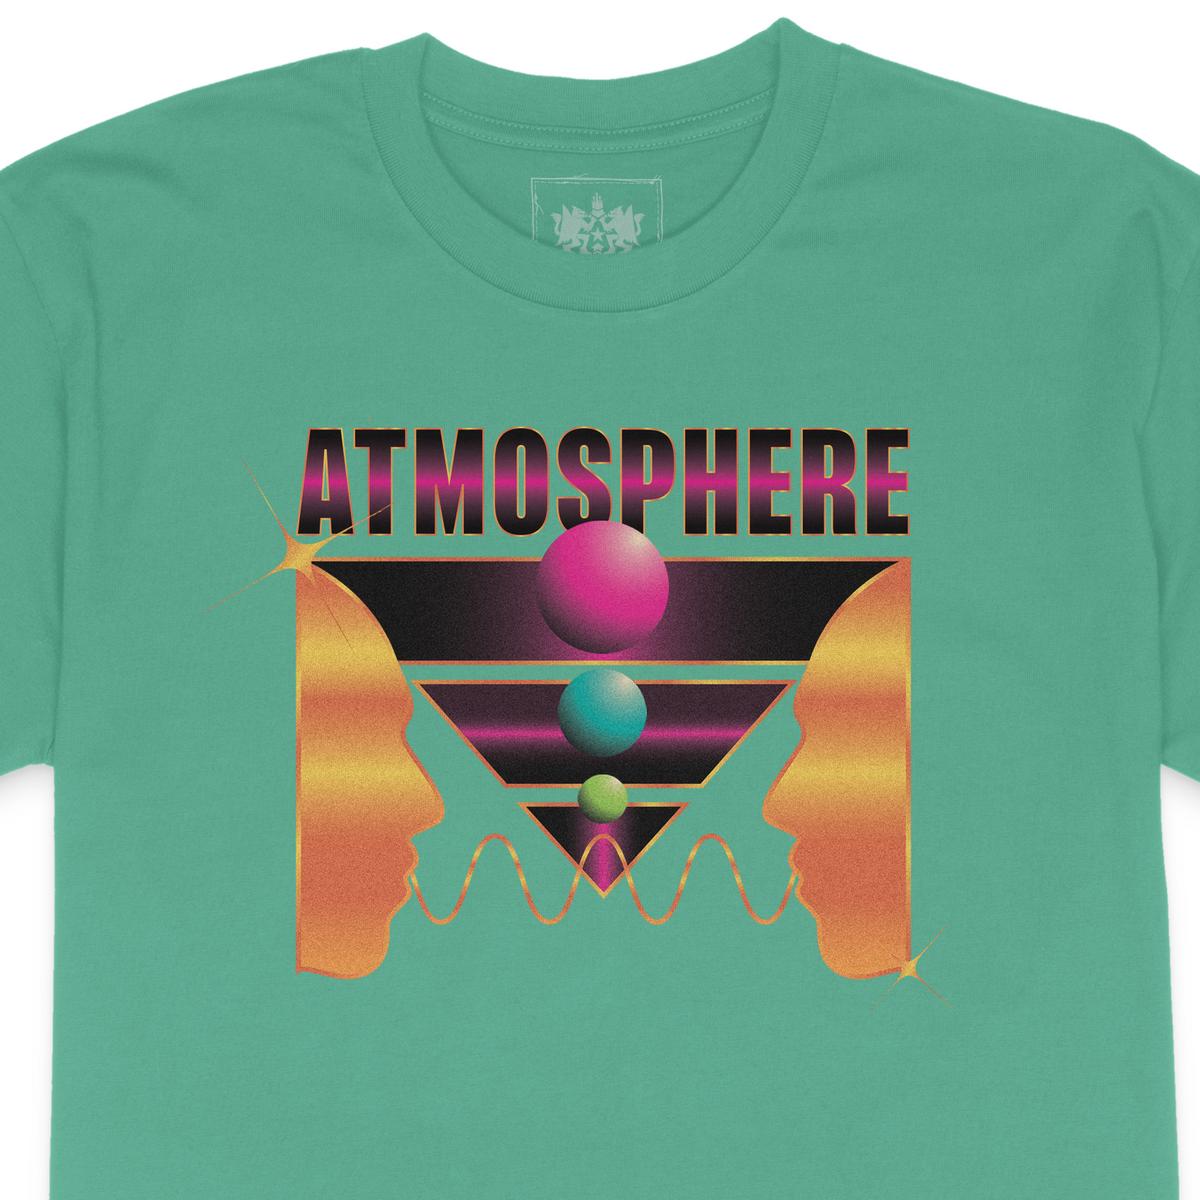 Atmosphere - Talk Talk Shirt (Topaz)